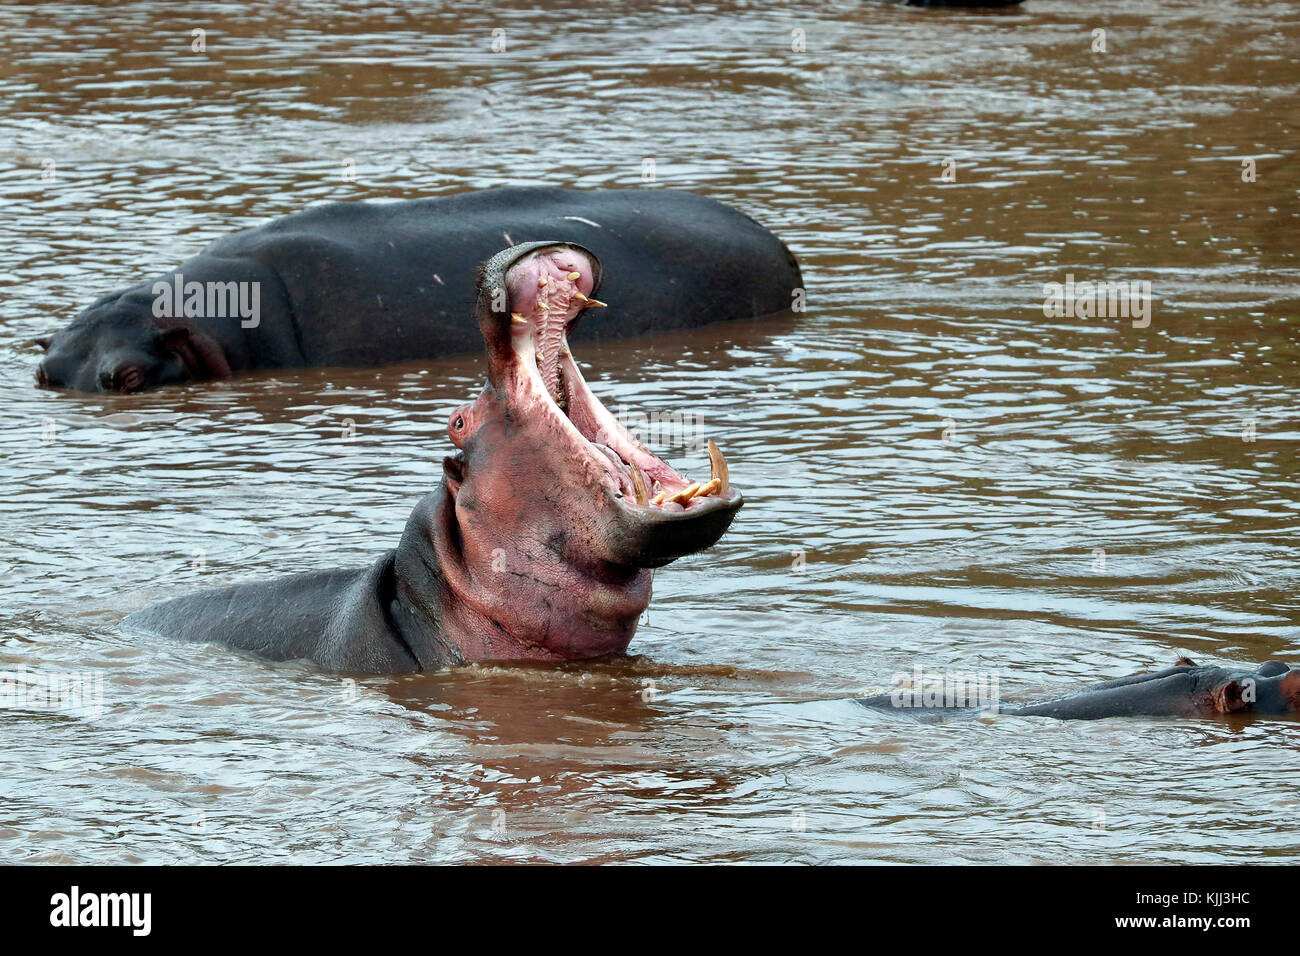 Hippopotamus amphibius (Hippopatamus) in Wasser mit mouh weit geöffnet. Masai Mara Game Reserve. Kenia. Stockfoto